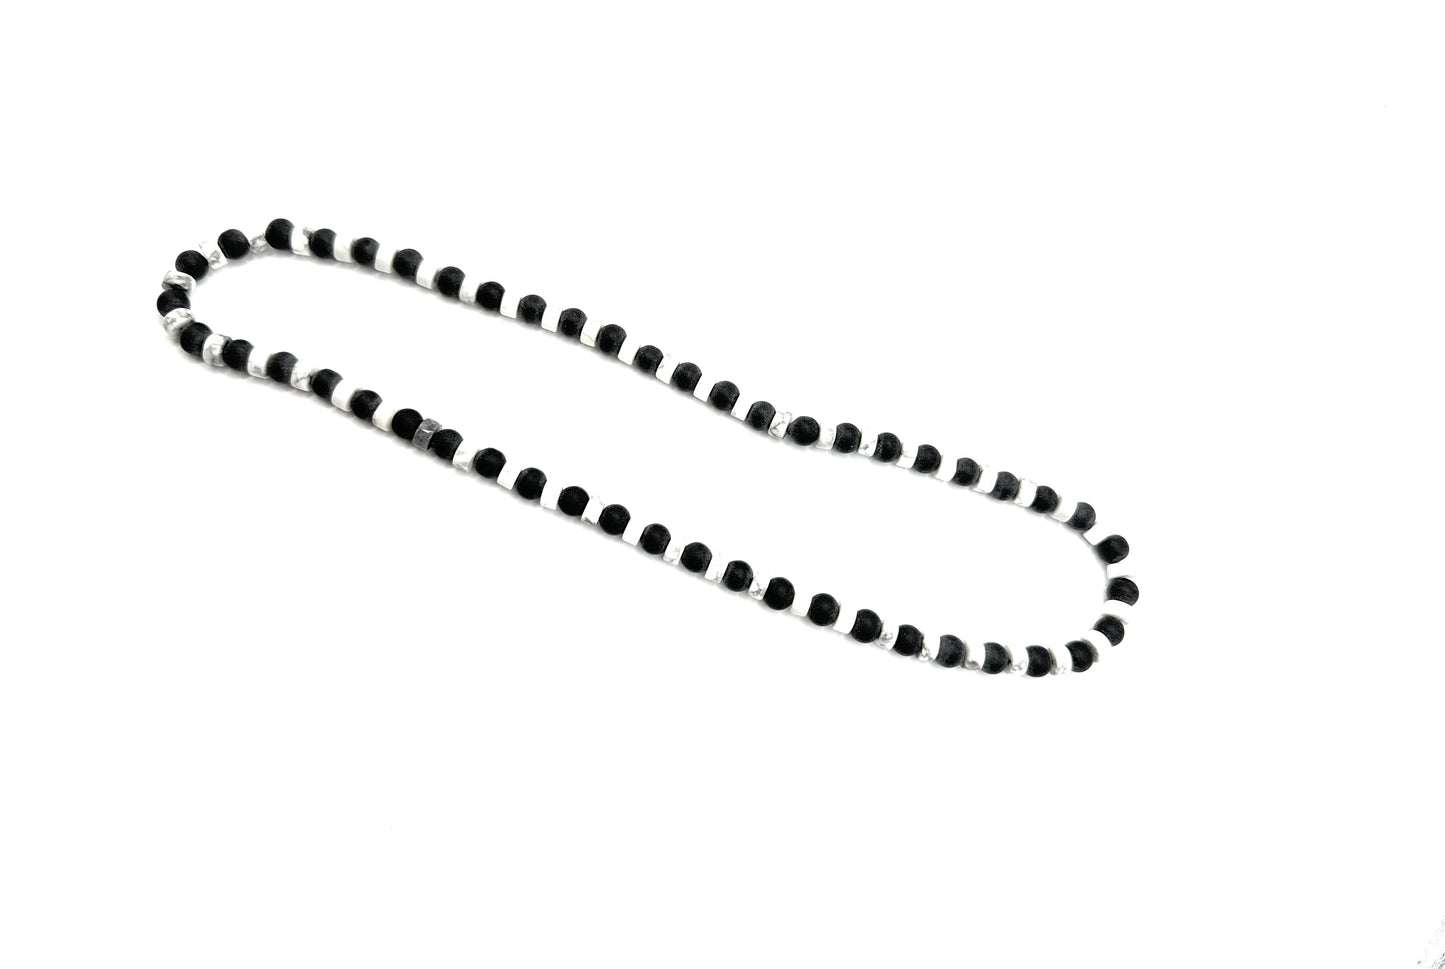 Matte Black Onyx, Heishi White Howlite Beaded Necklace – 6mm